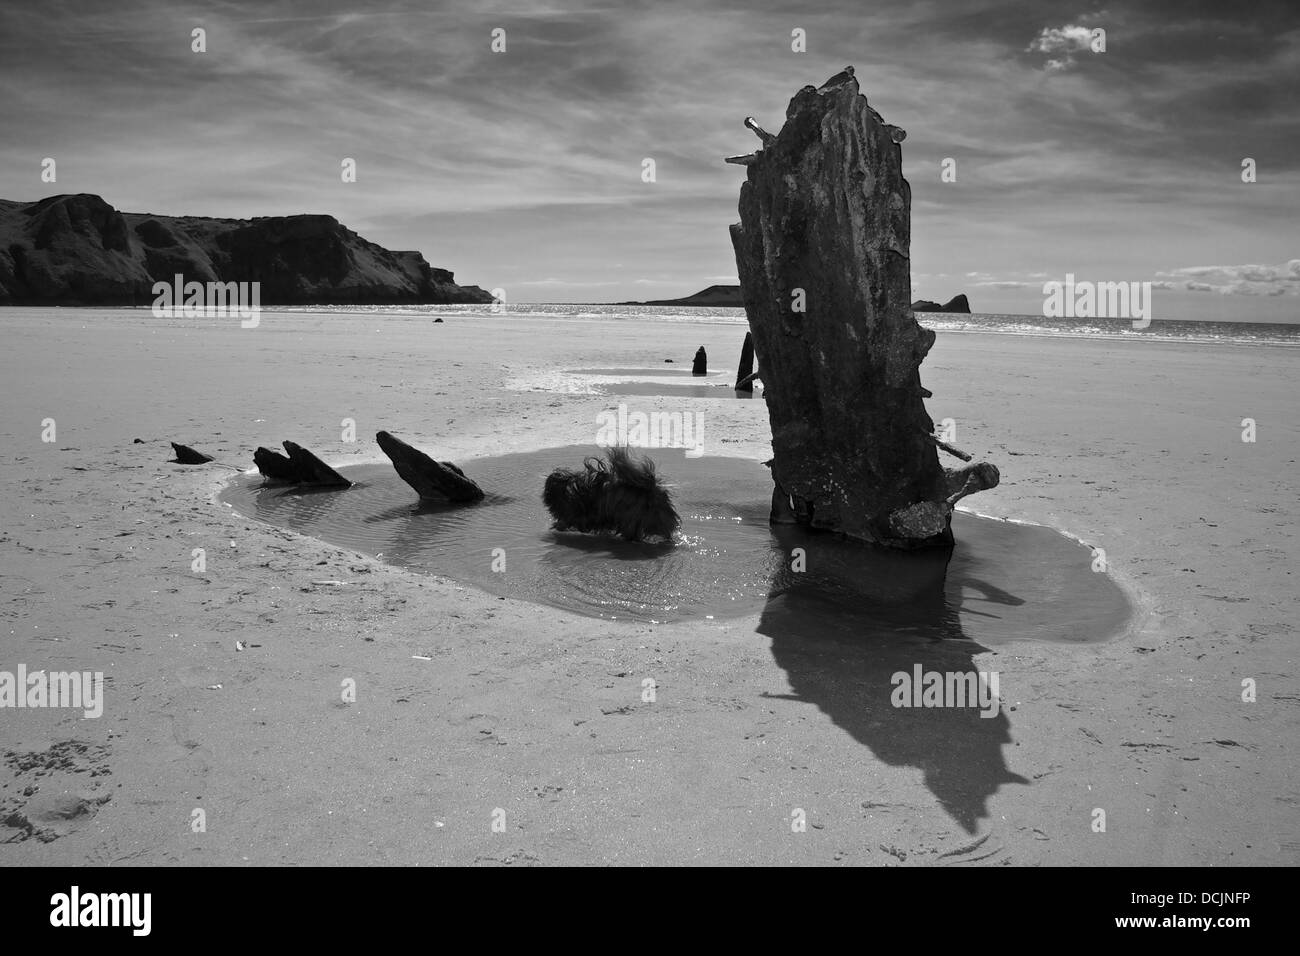 Shipwreck on the beach Stock Photo